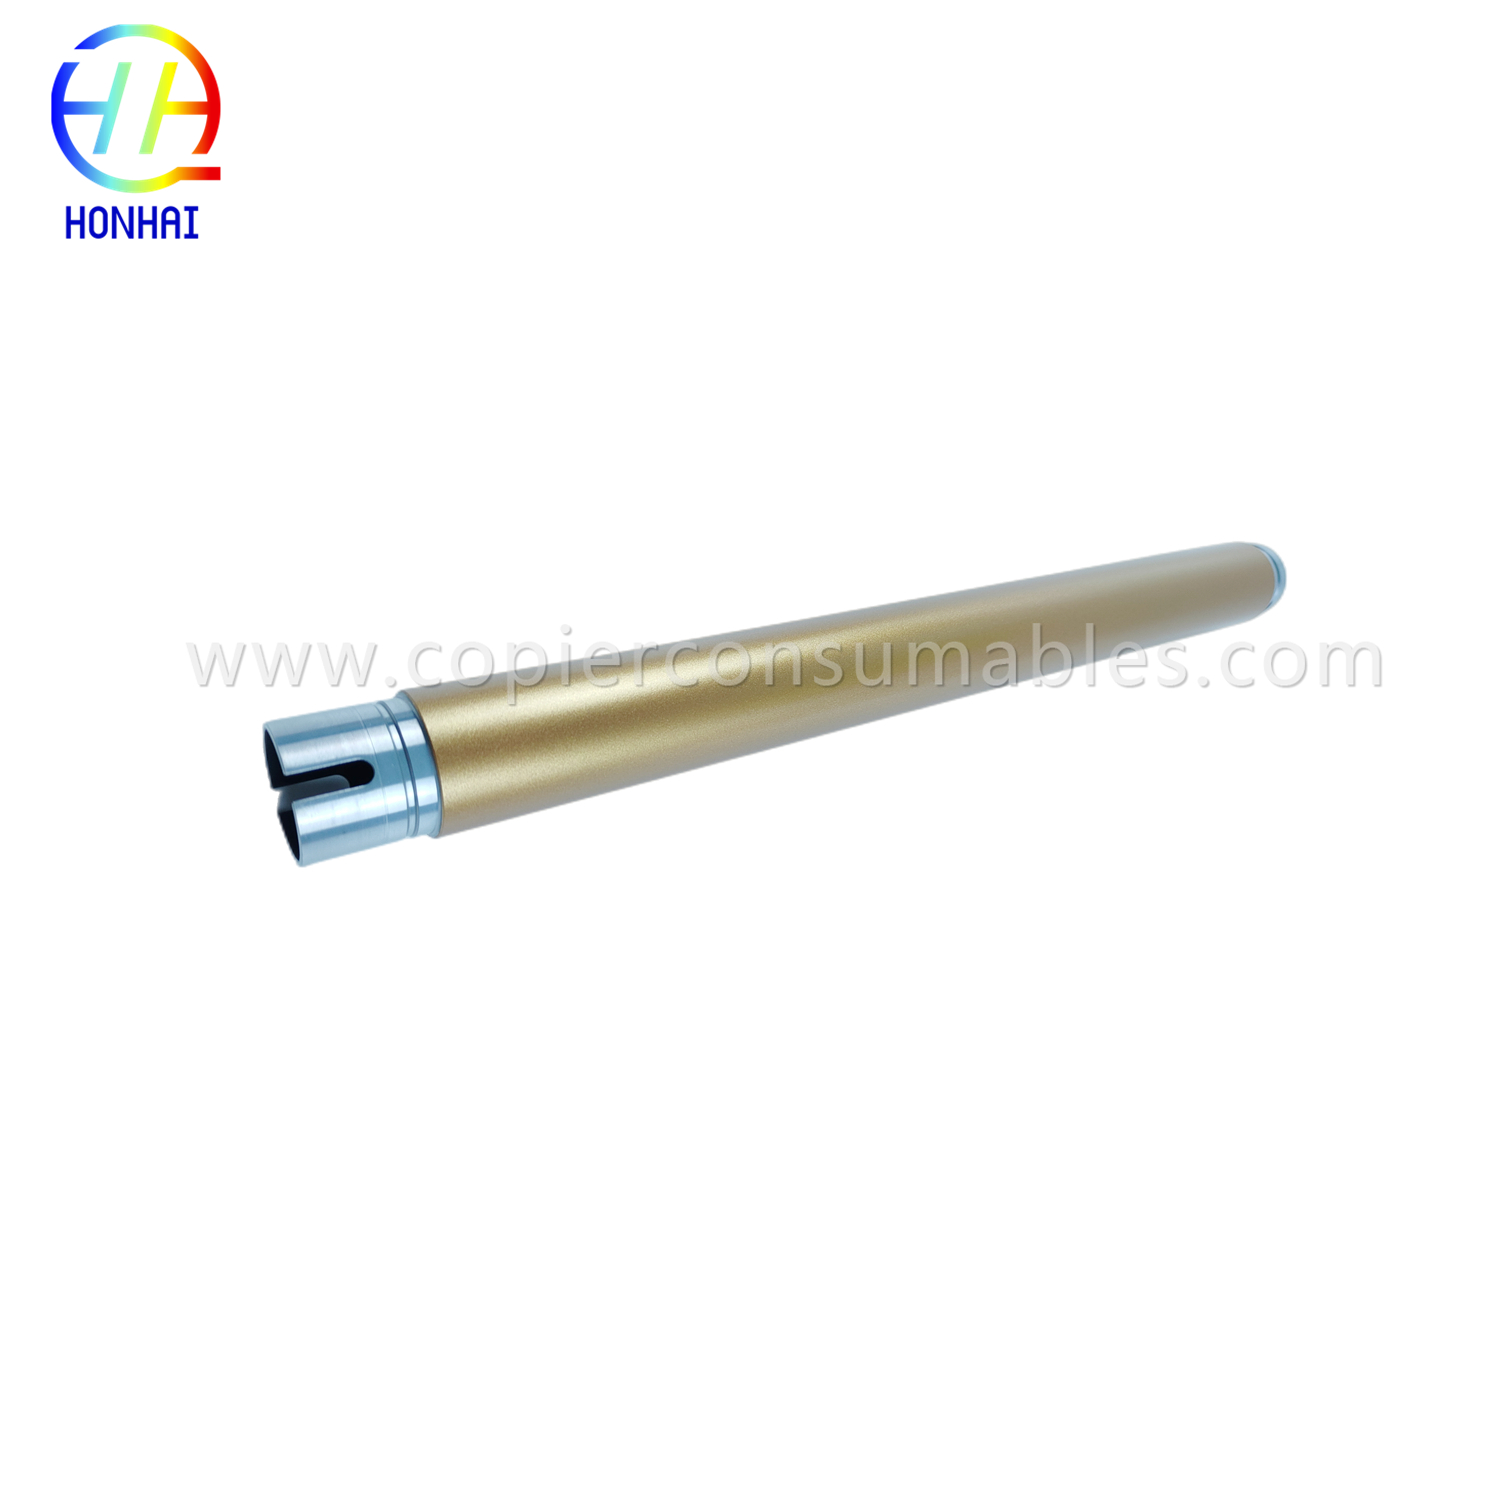 https://www.copierconsumables.com/upper-fuser-roller-for-xerox-versaling-b400-3610-3615-3655-heating-roller-01218a-product/